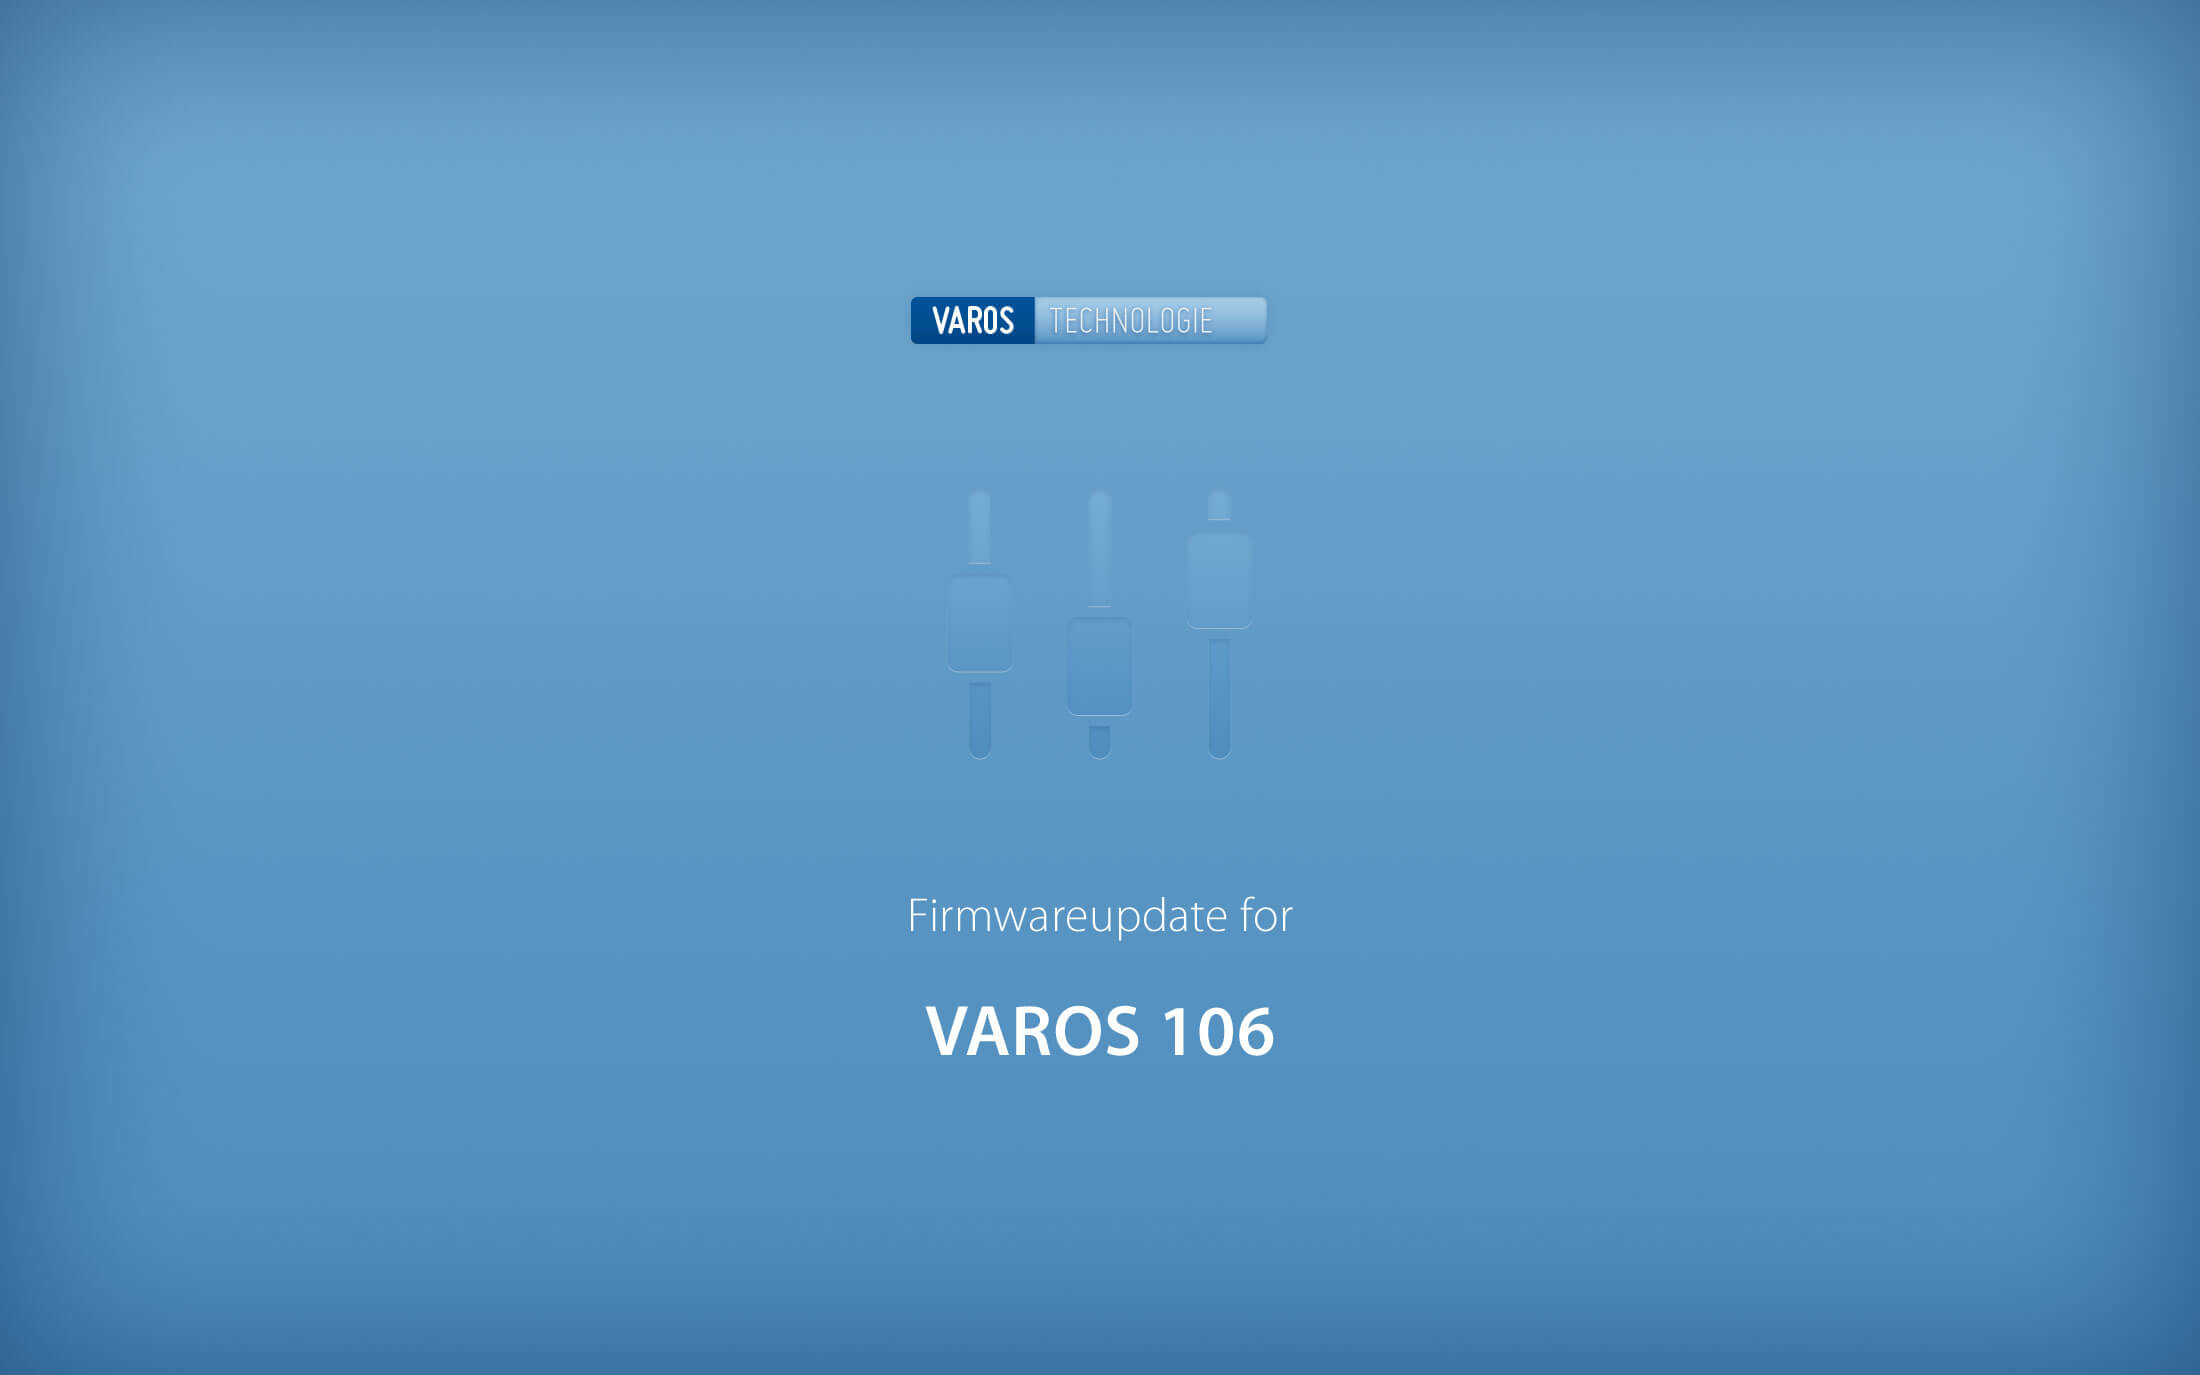 KWS Electronic VAROS 106: New firmware update